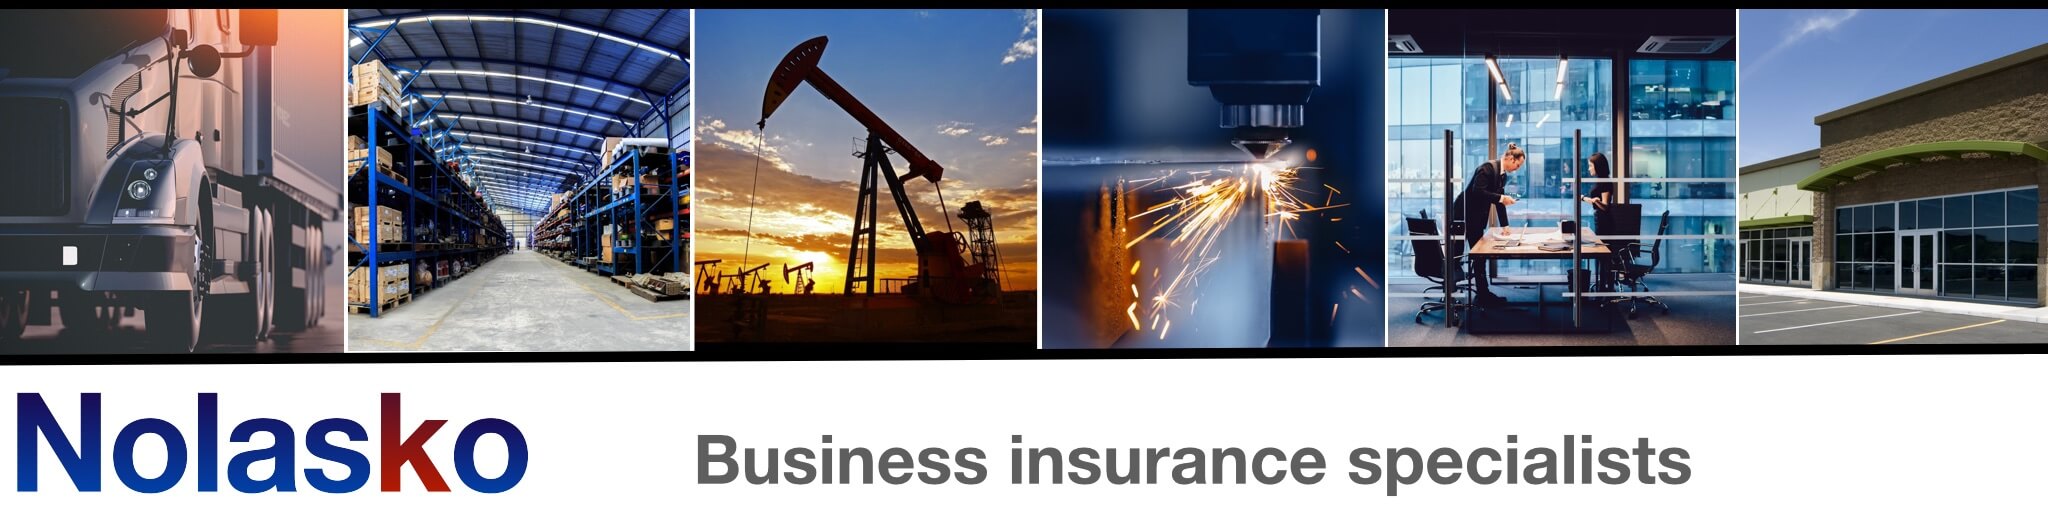 Nolasko -Business insurance specialists